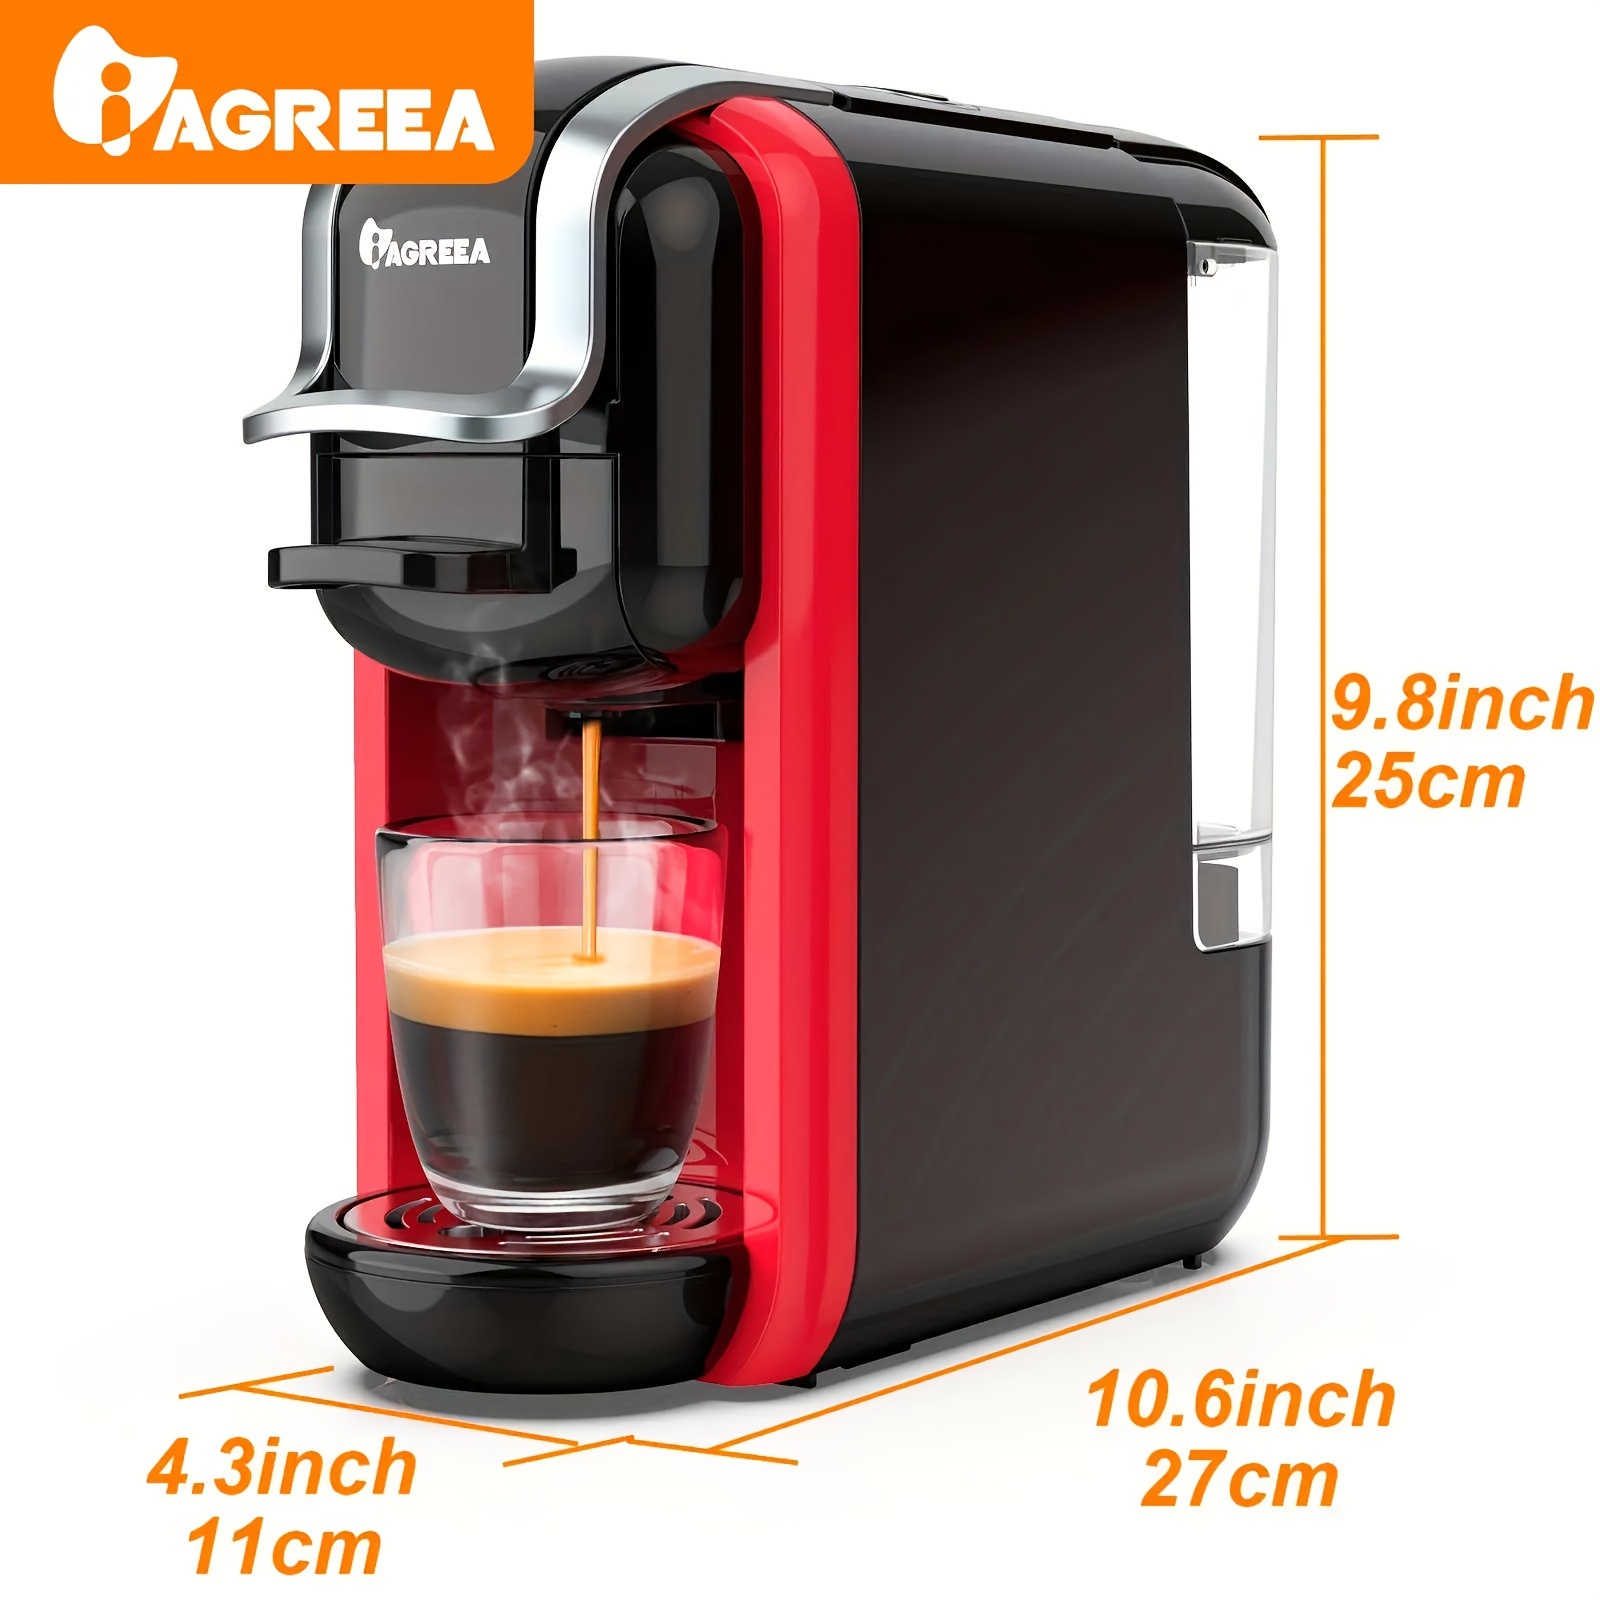 Pod Coffee Maker Single Serve, HiBREW 5-in-1 Espresso Machine for Pods, K- cup*/Nes* Original/DG*/ESE Pod/Espresso Powder Compatible, Cold/Hot Mode,  20 oz Removable Reservoir, LED Bars Indicator, 19Bar 